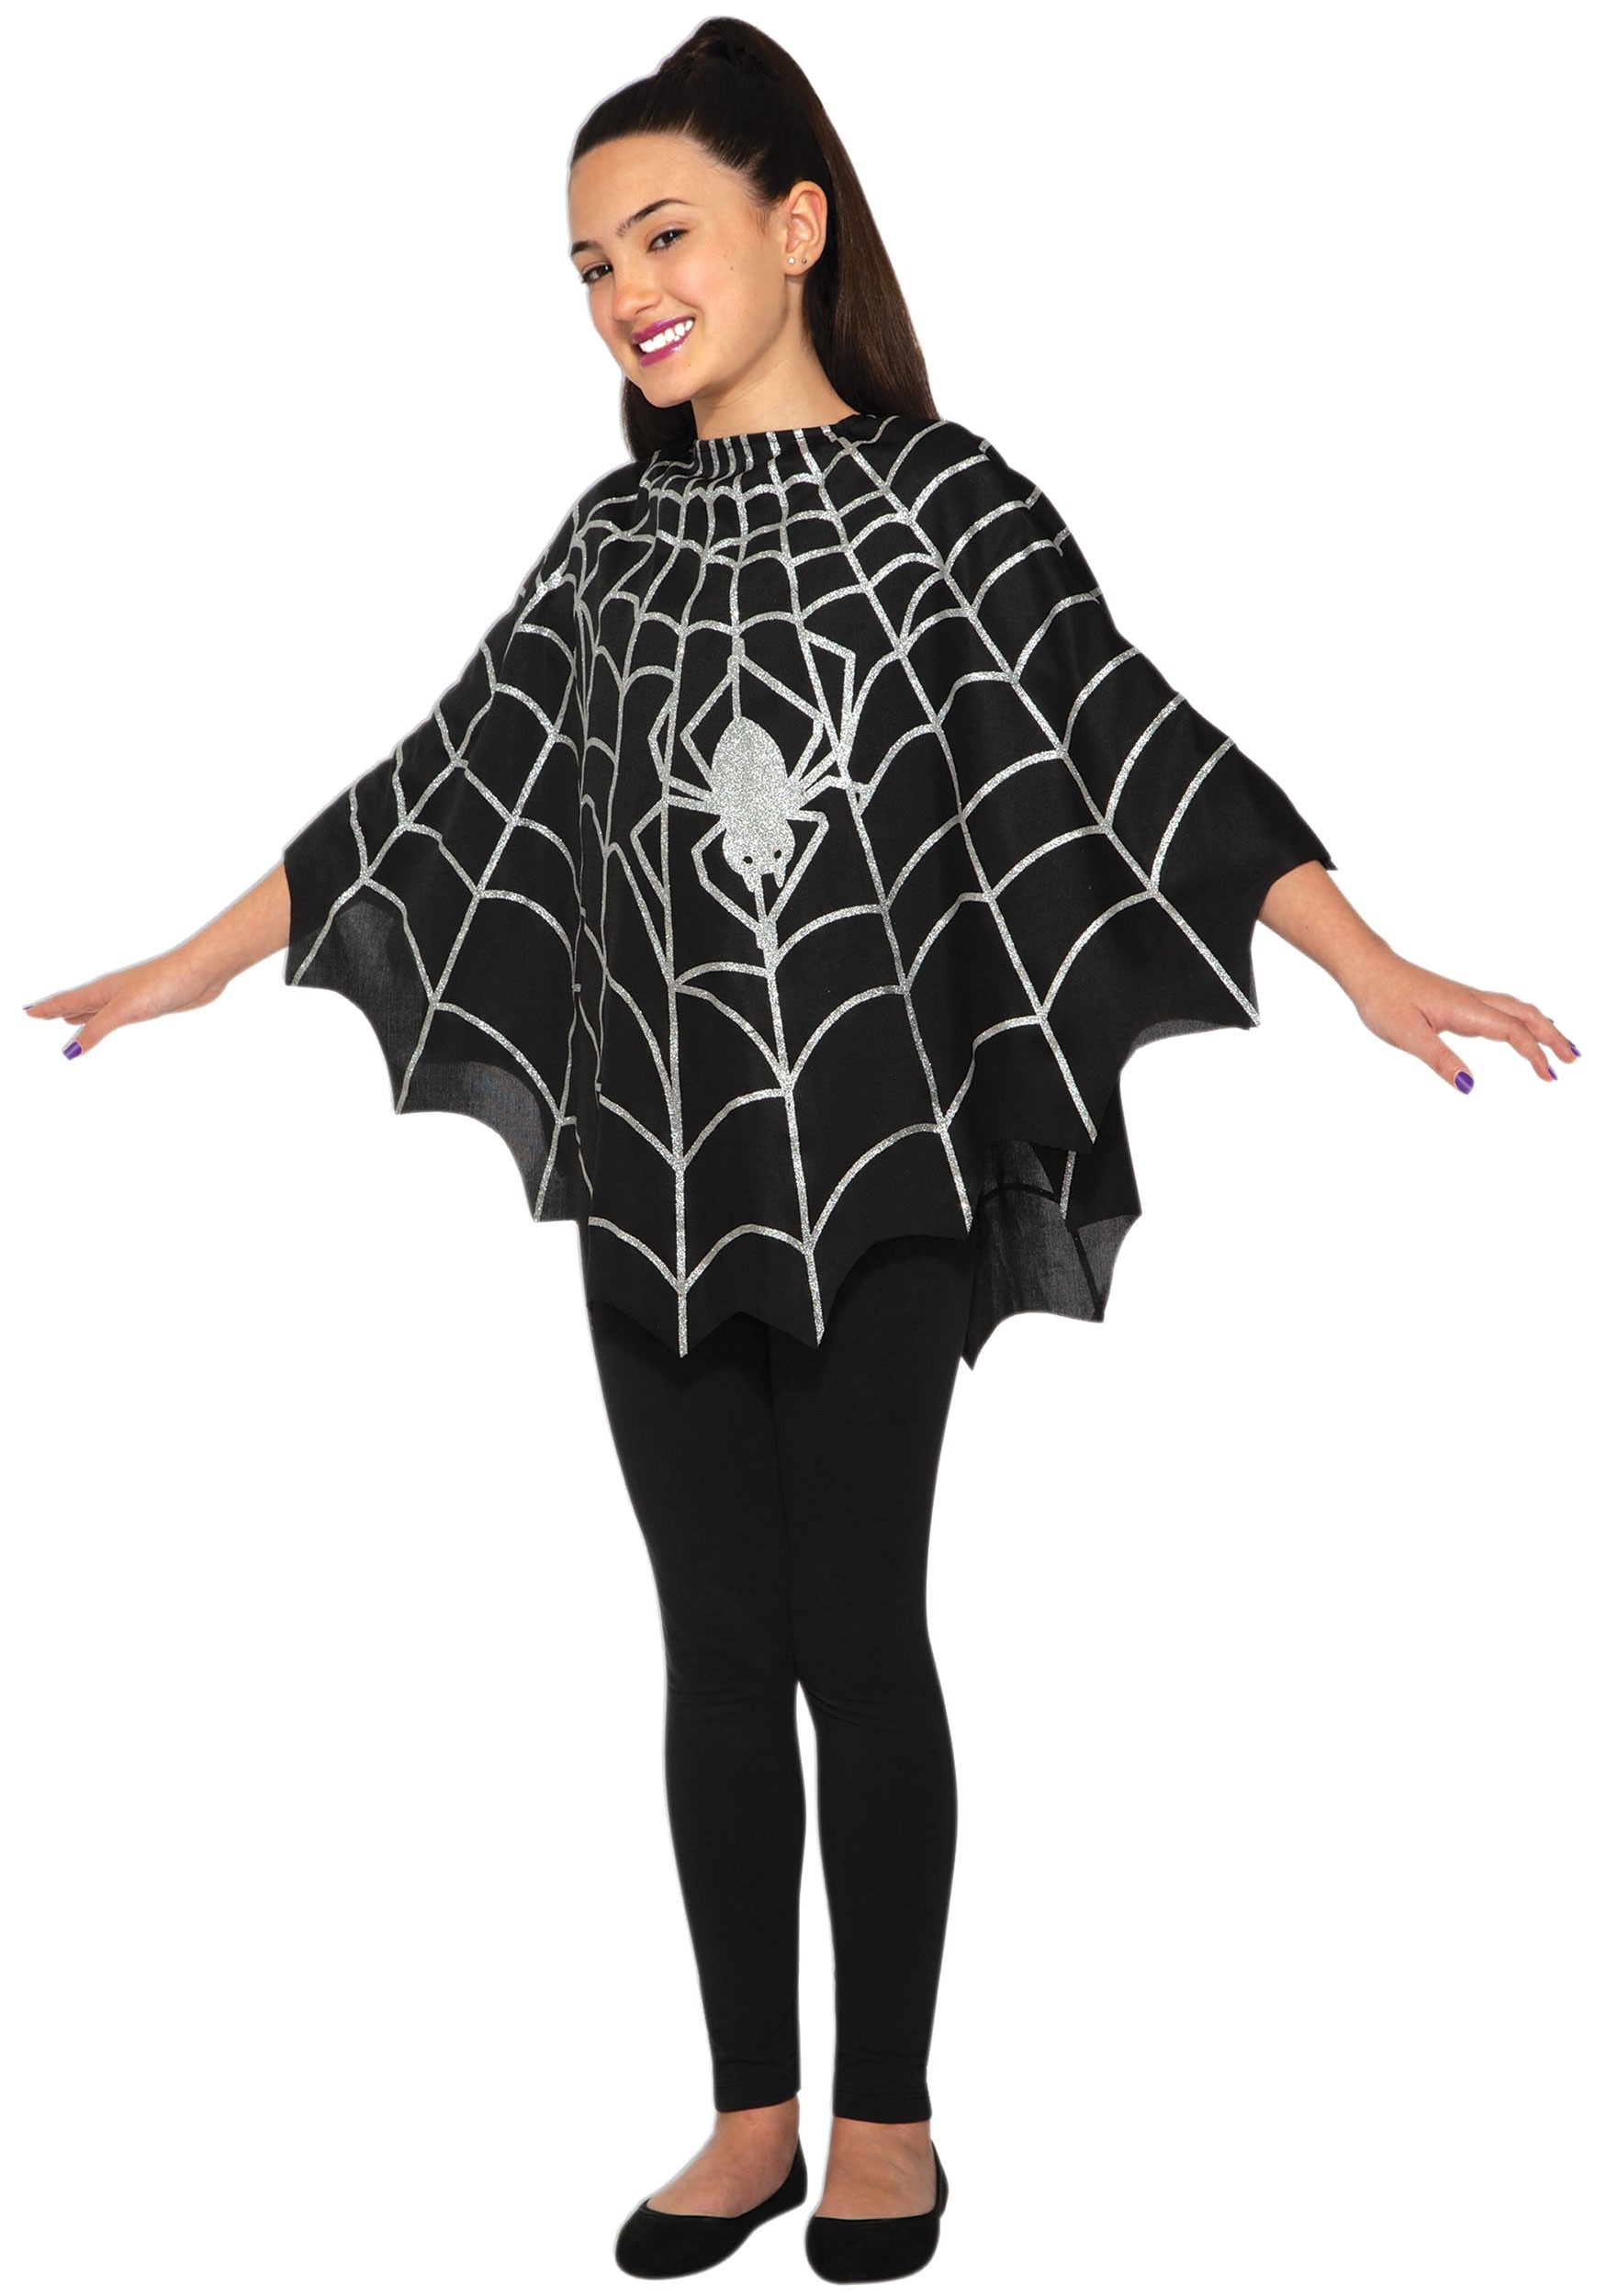 Kid’s Black Spider Poncho Costume